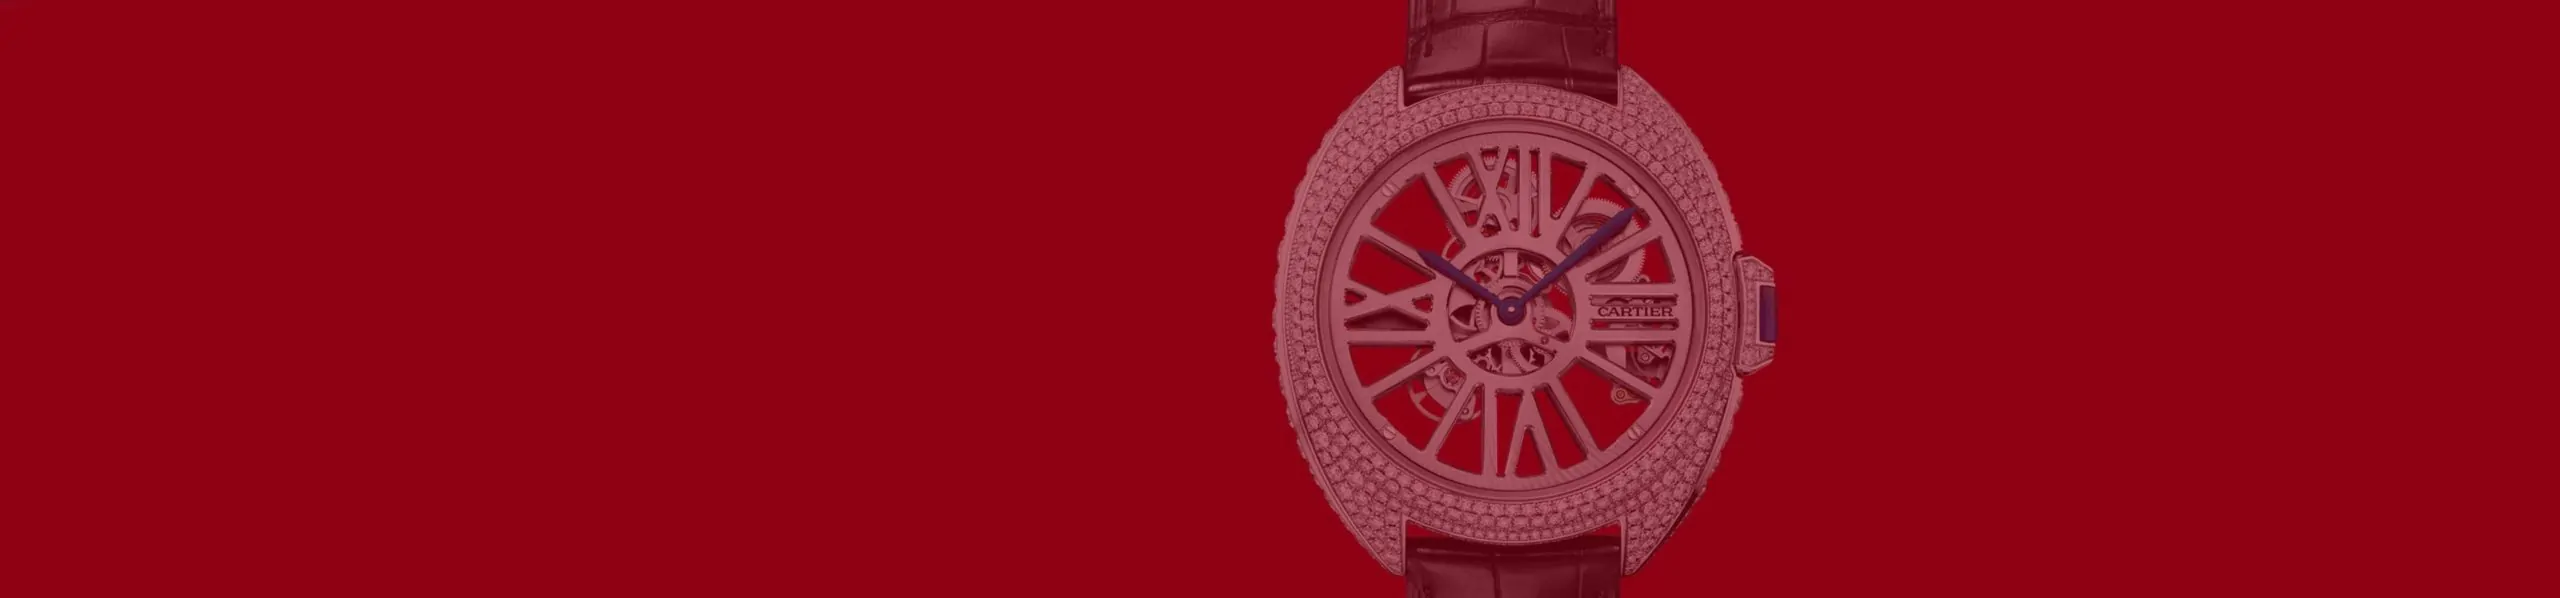 Exclusive Cartier Timepieces